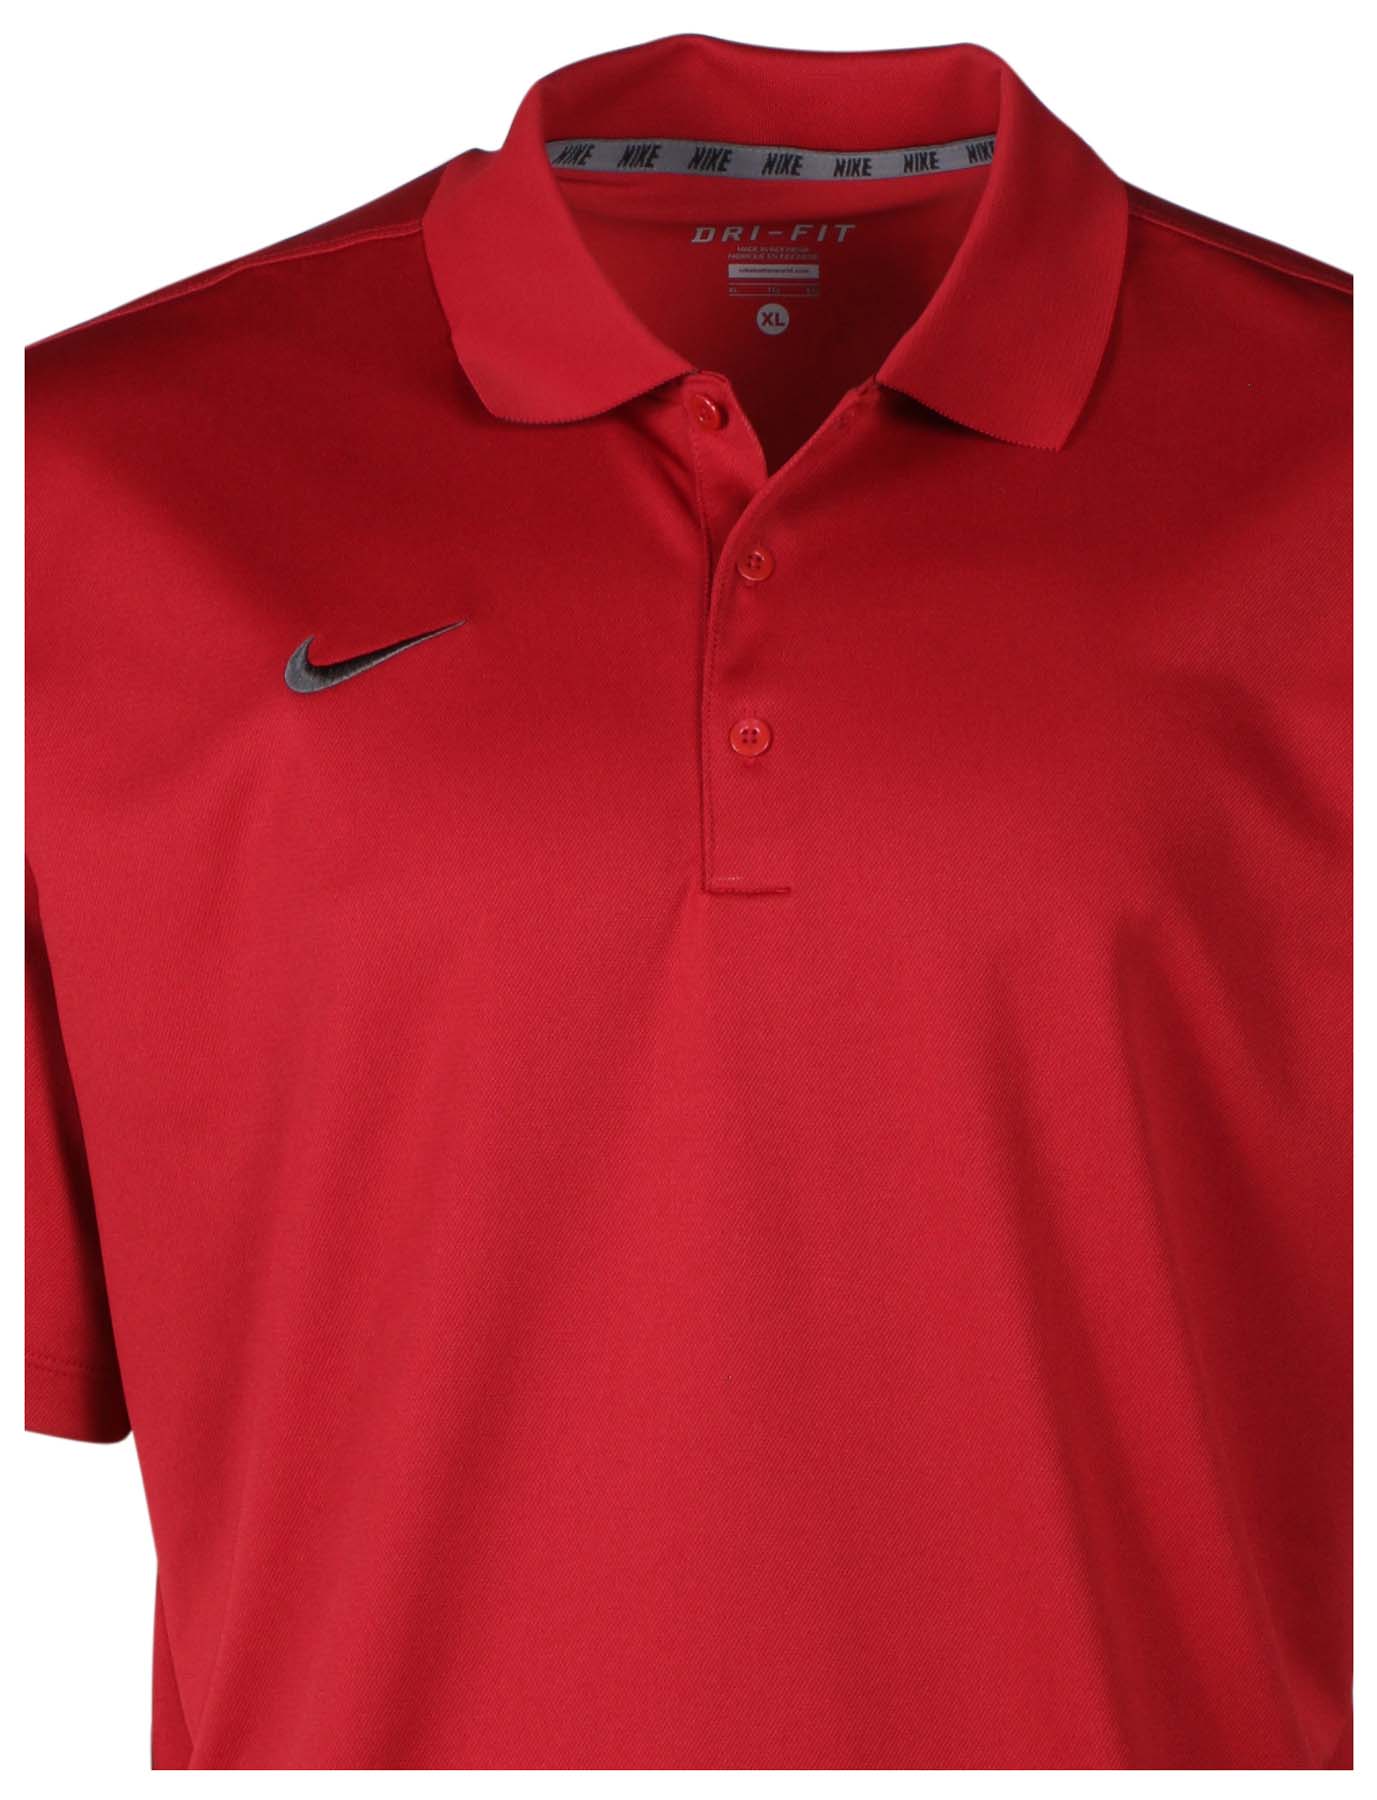 Nike Men's Dri-Fit Football Polo Shirt - image 2 of 3